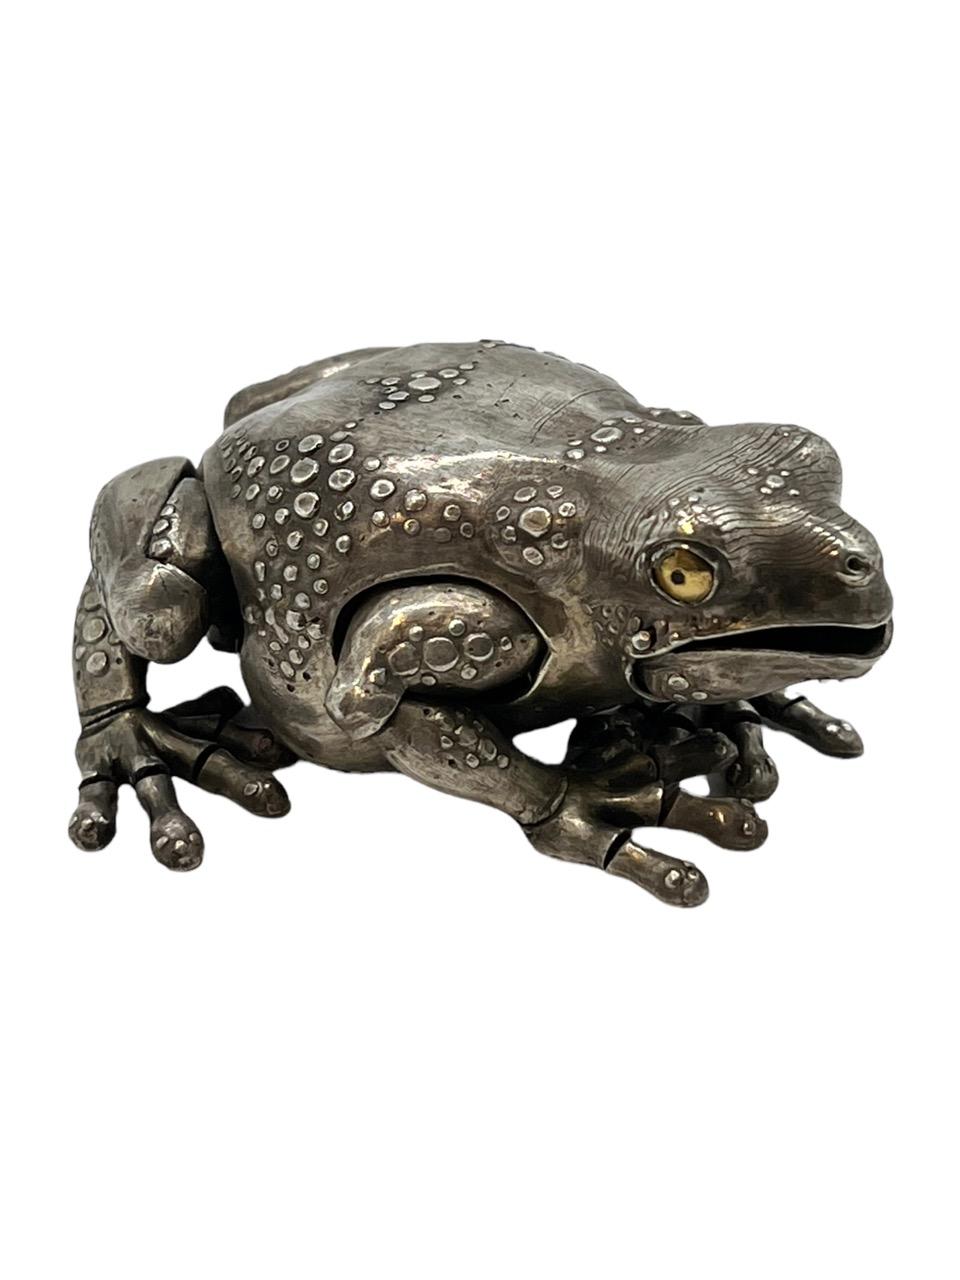 Contemporary Oleg Konstantinov Fully Articulated Frog Made of Sterling Silver